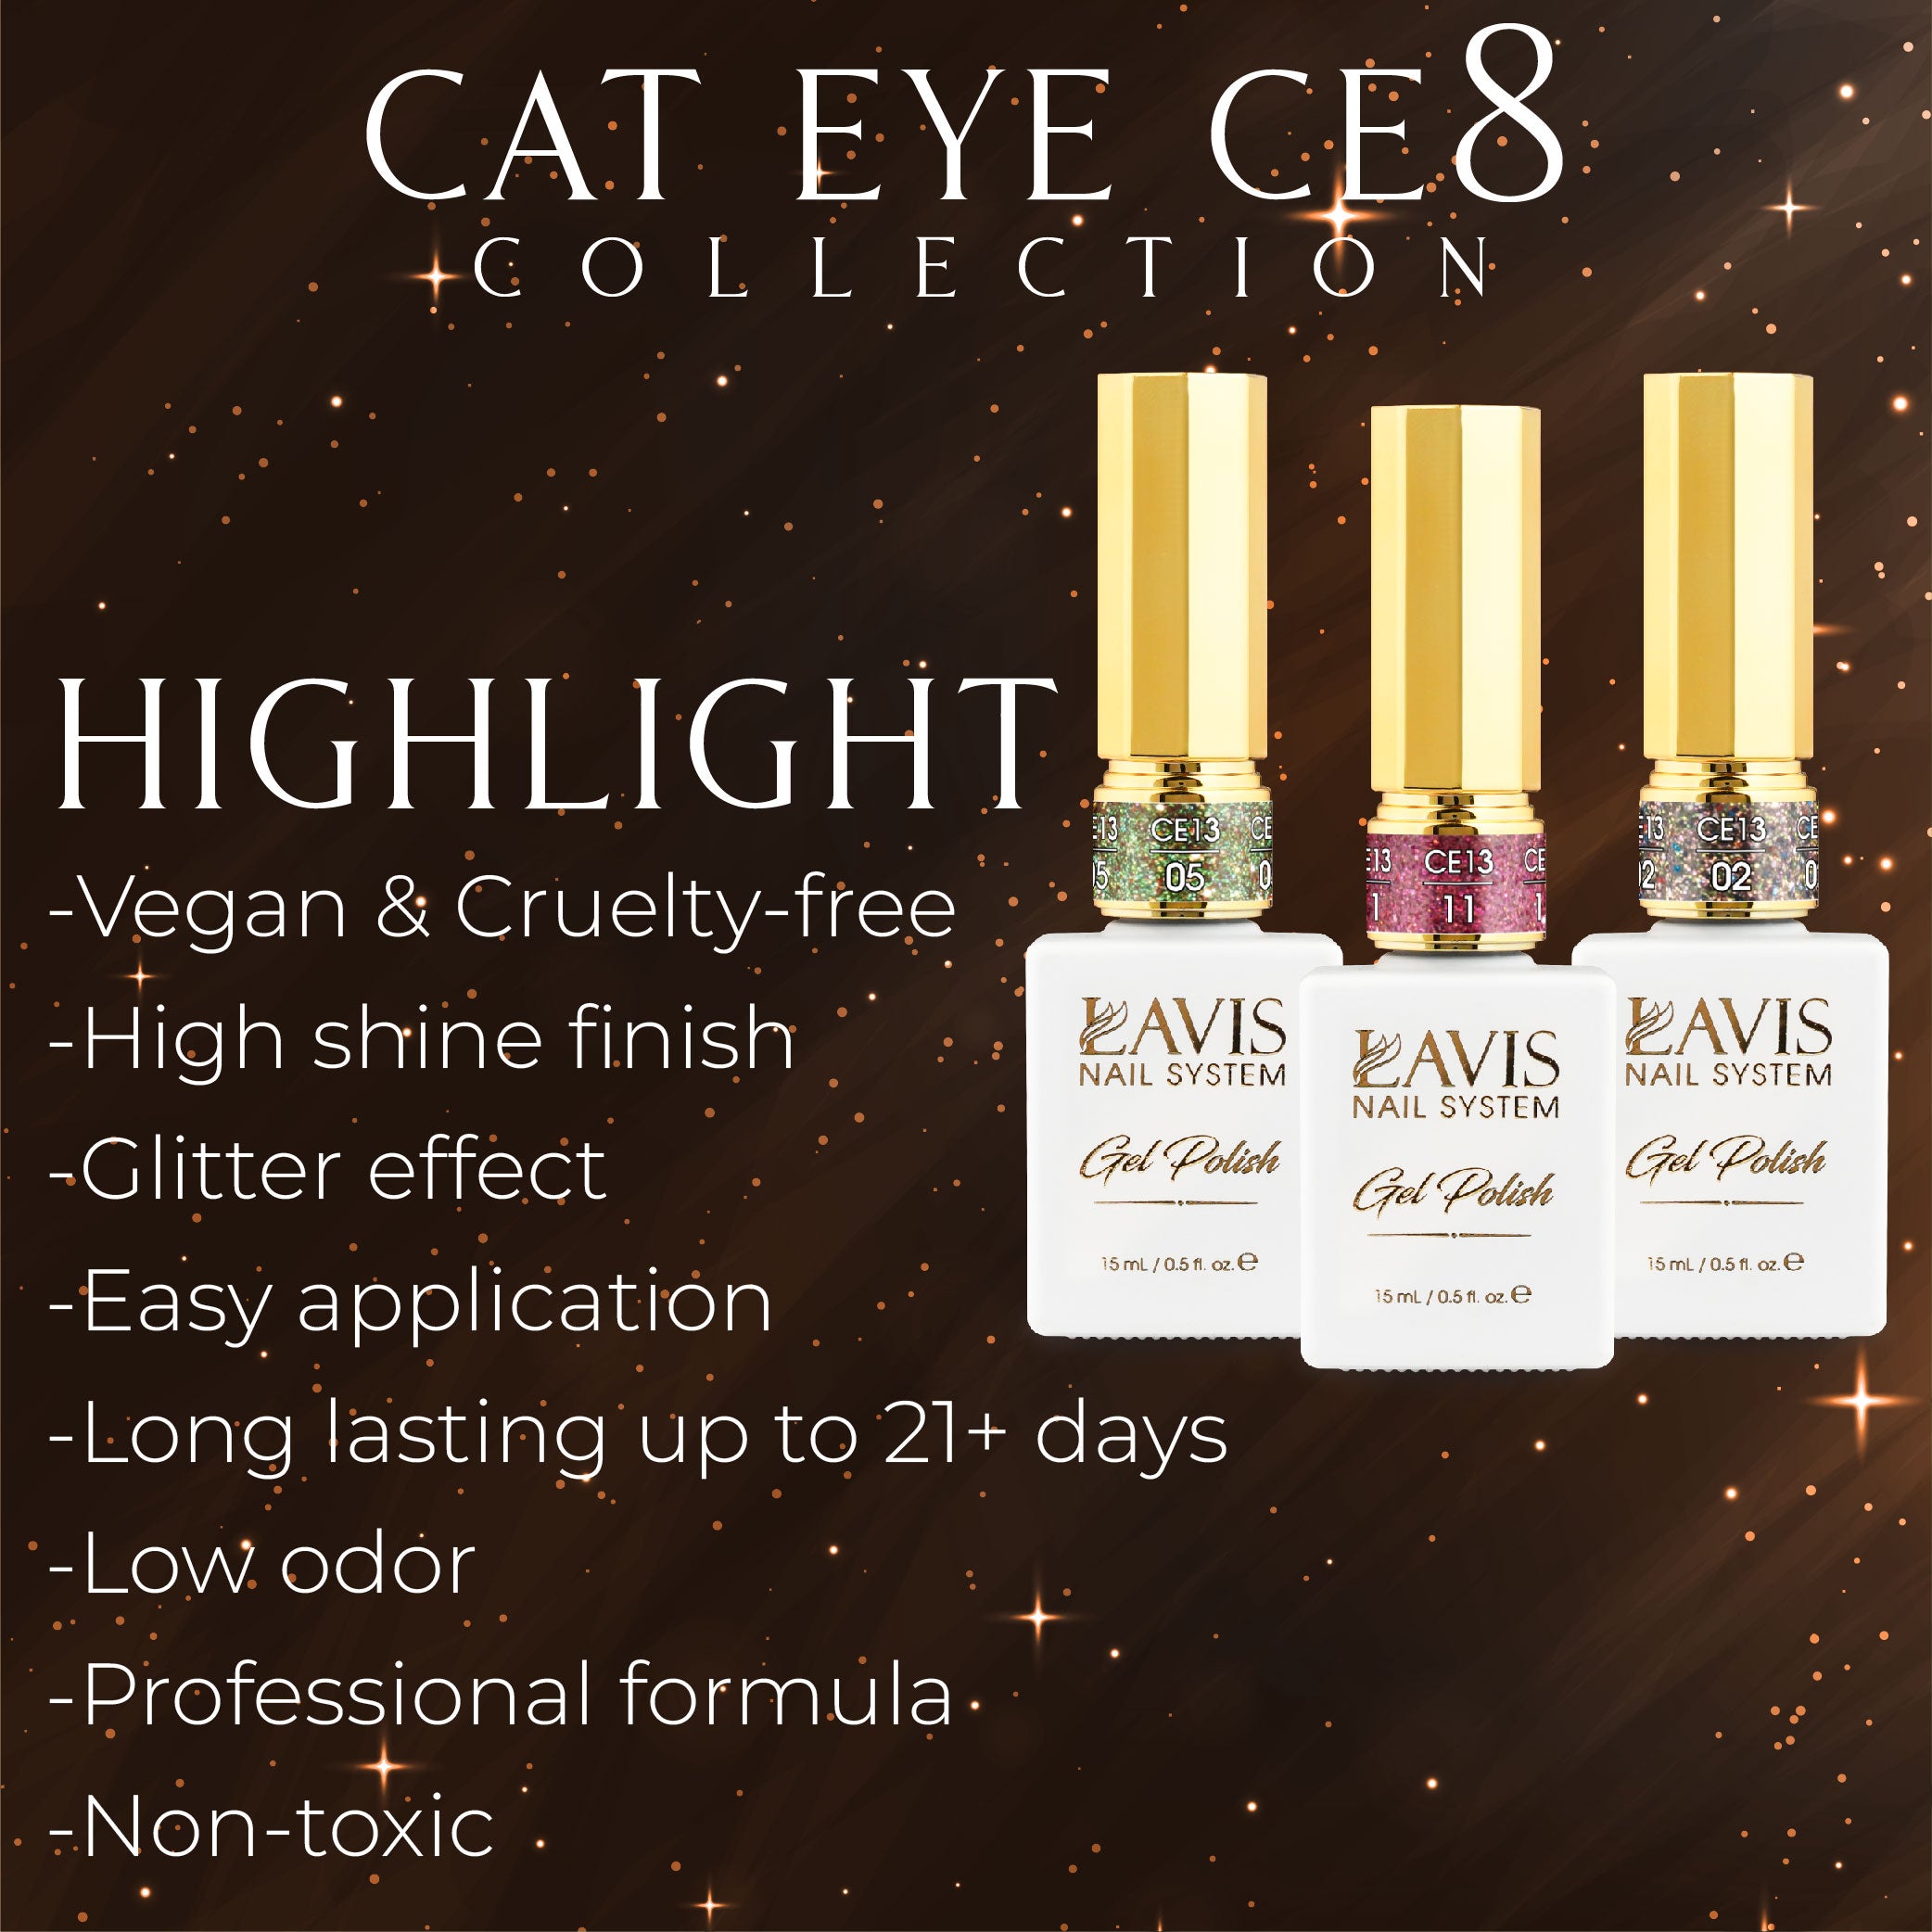 LAVIS Cat Eyes CE8 - 02 - Gel Polish 0.5 oz - Lavis Hidden Treasures Collection